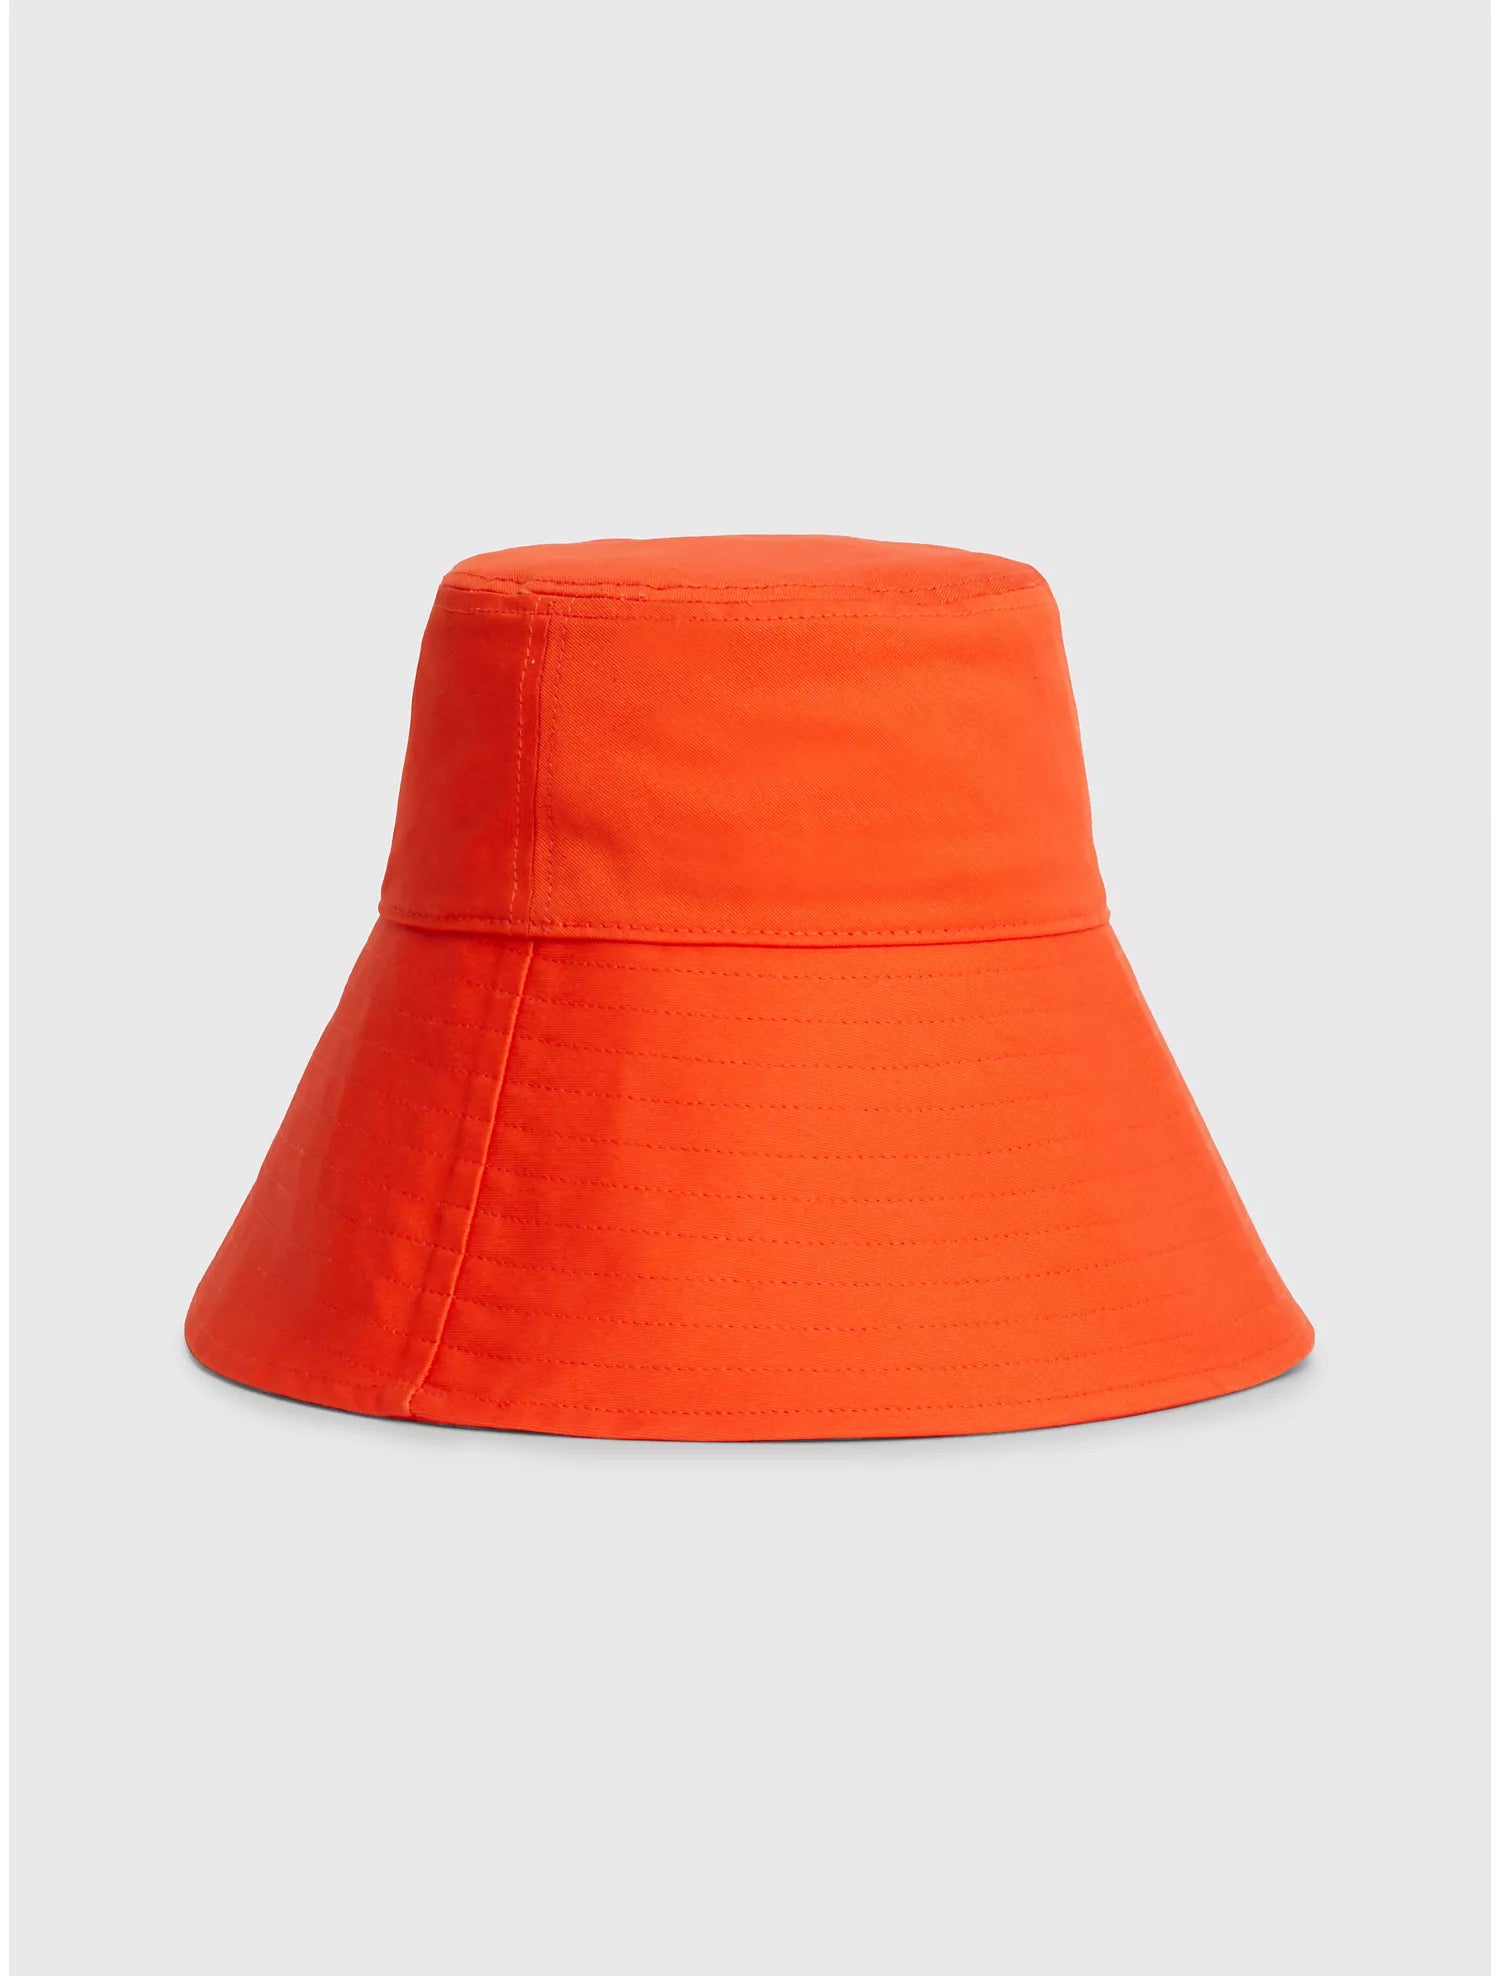 Tommy Hilfiger Th X Andy Warhol Reversible Bucket Hat - Women